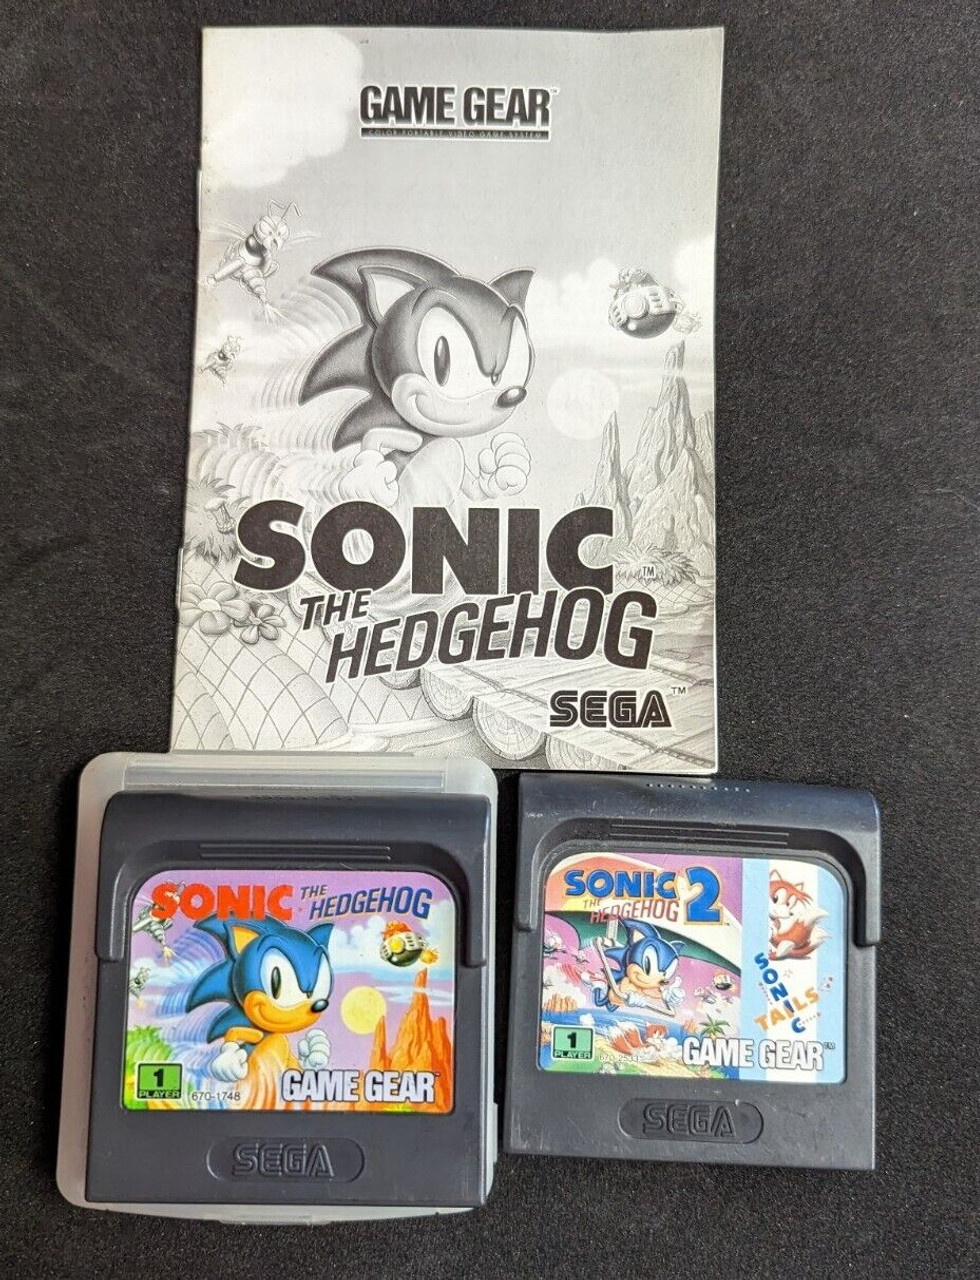 Sonic the Hedgehog 2 Sega Game Gear 